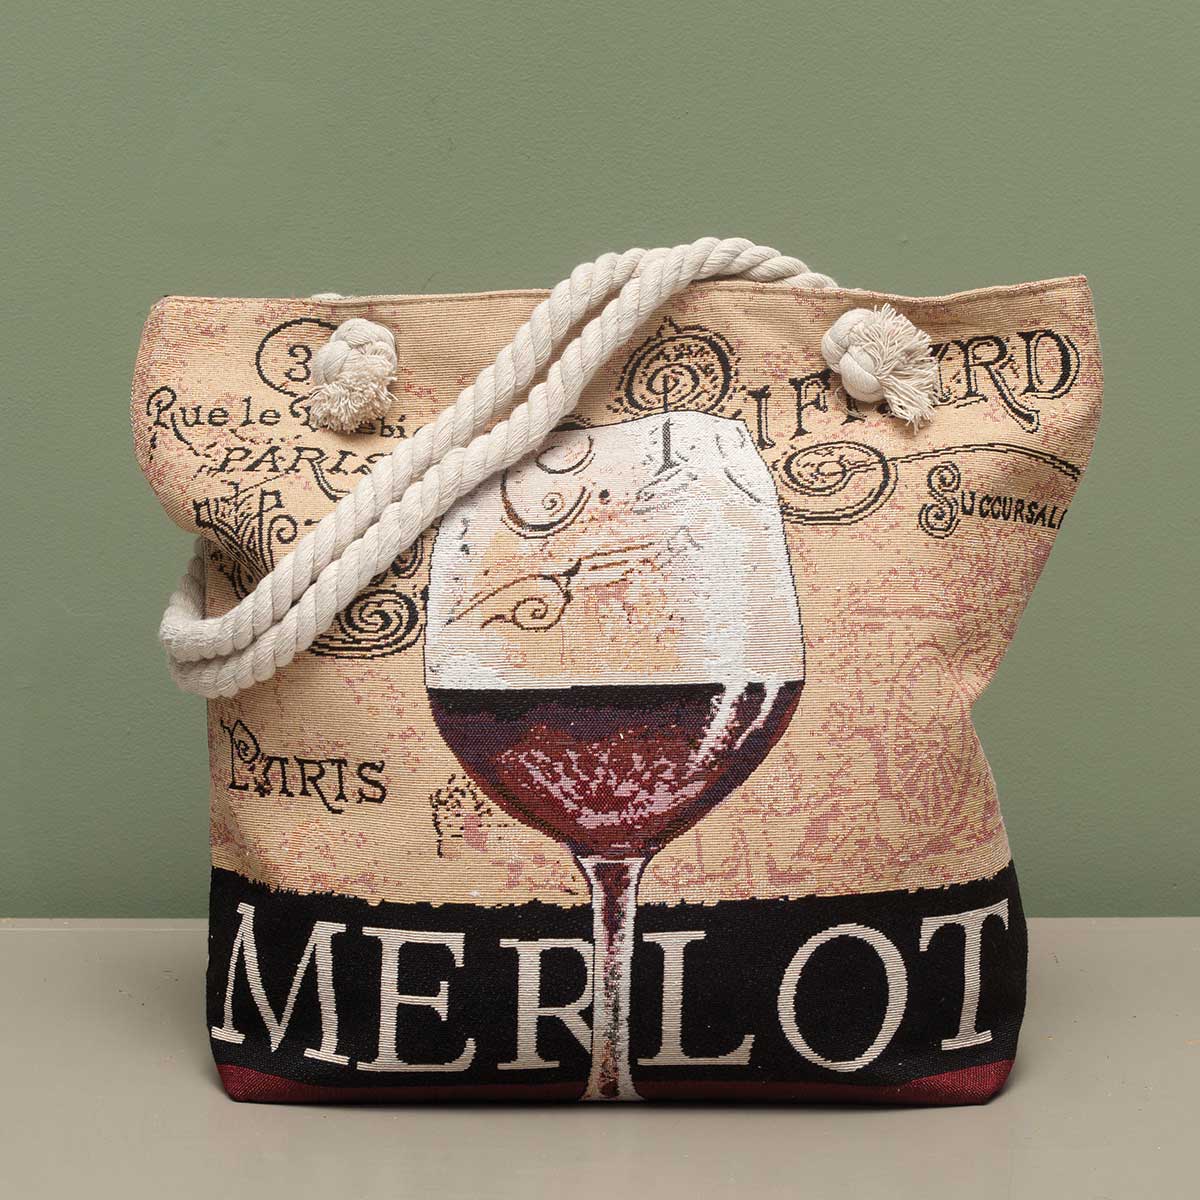 Merlot Tapestry Bag 17.5"x5"x14" with 10" Shoulder Strap